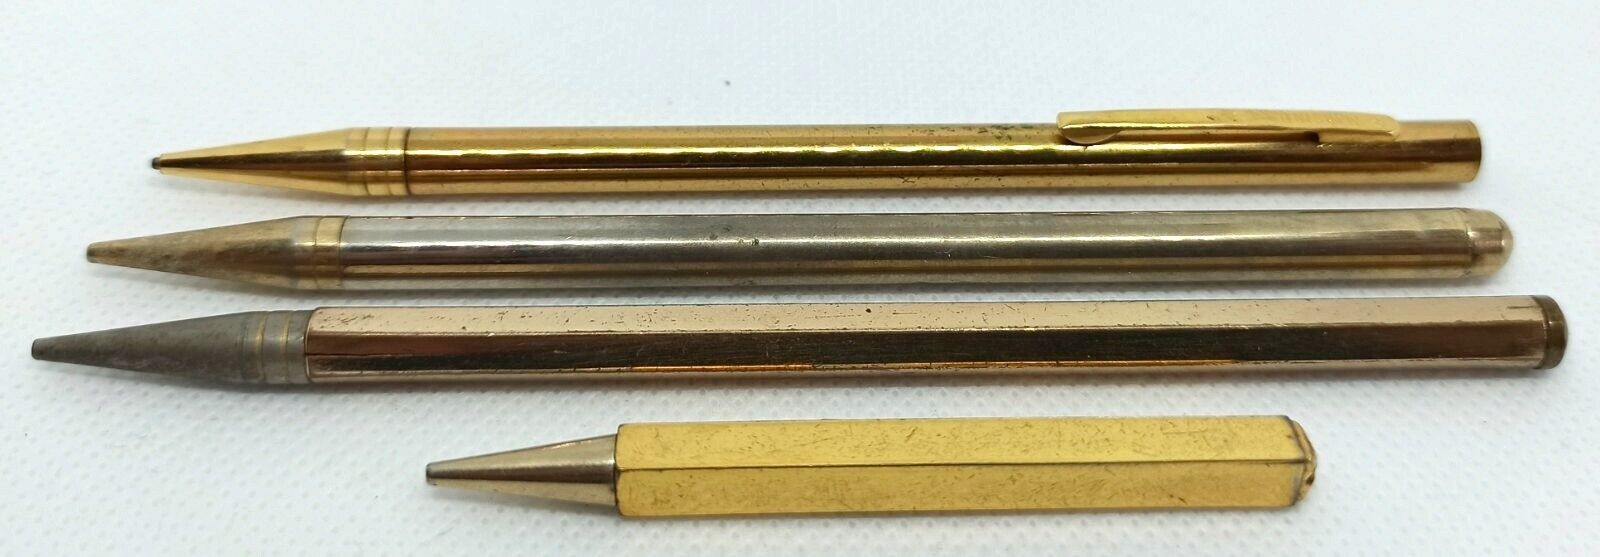 Lot 4 pcs Mechanical Pencils - For Restore or Parts Works